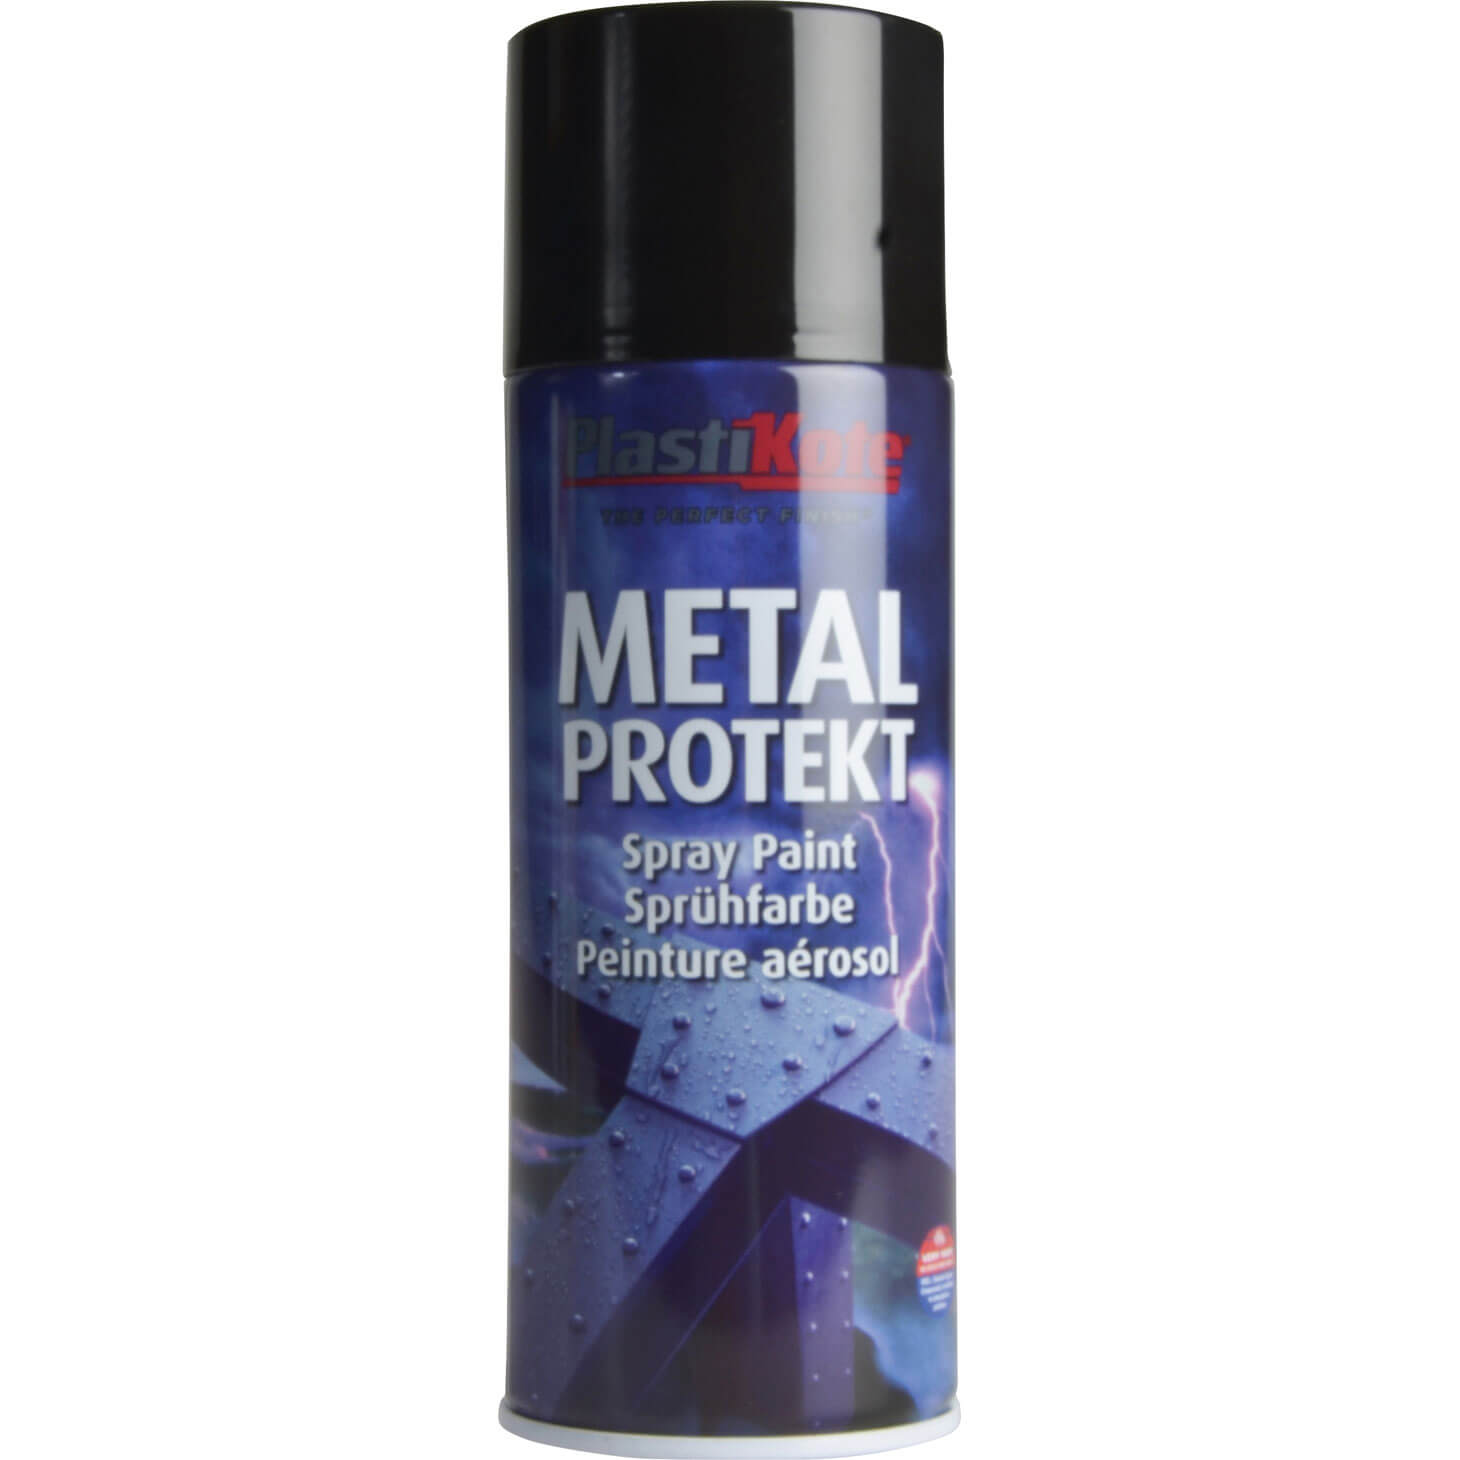 Photos - Varnish Plastikote Metal Protekt Aerosol Spray Paint Gloss Black 400ml 1282